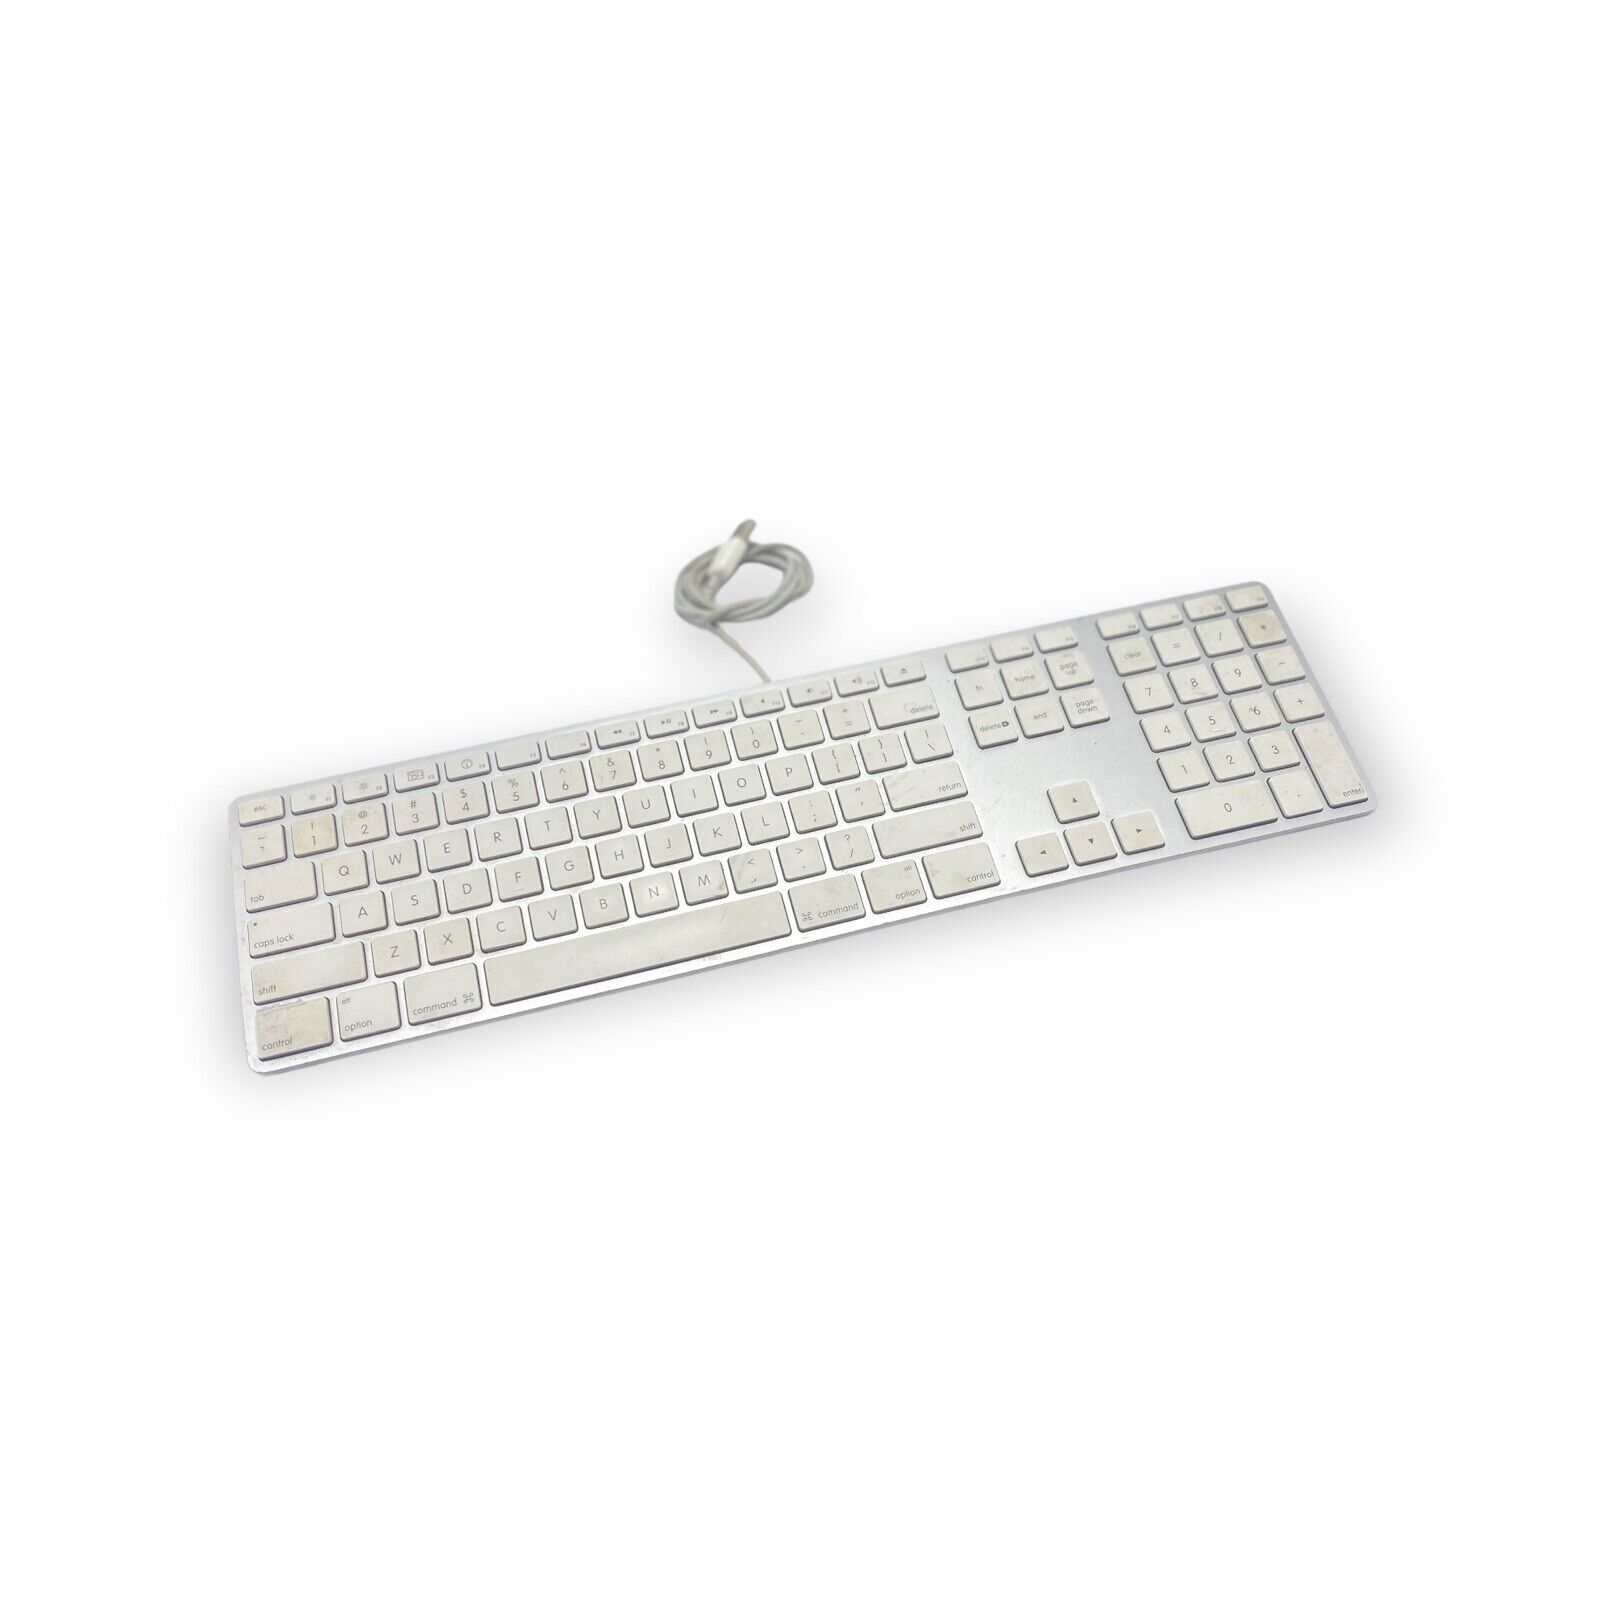 Apple  slim USB Wired Keyboard A1243 Aluminum Standard  Full Size 10 key corded